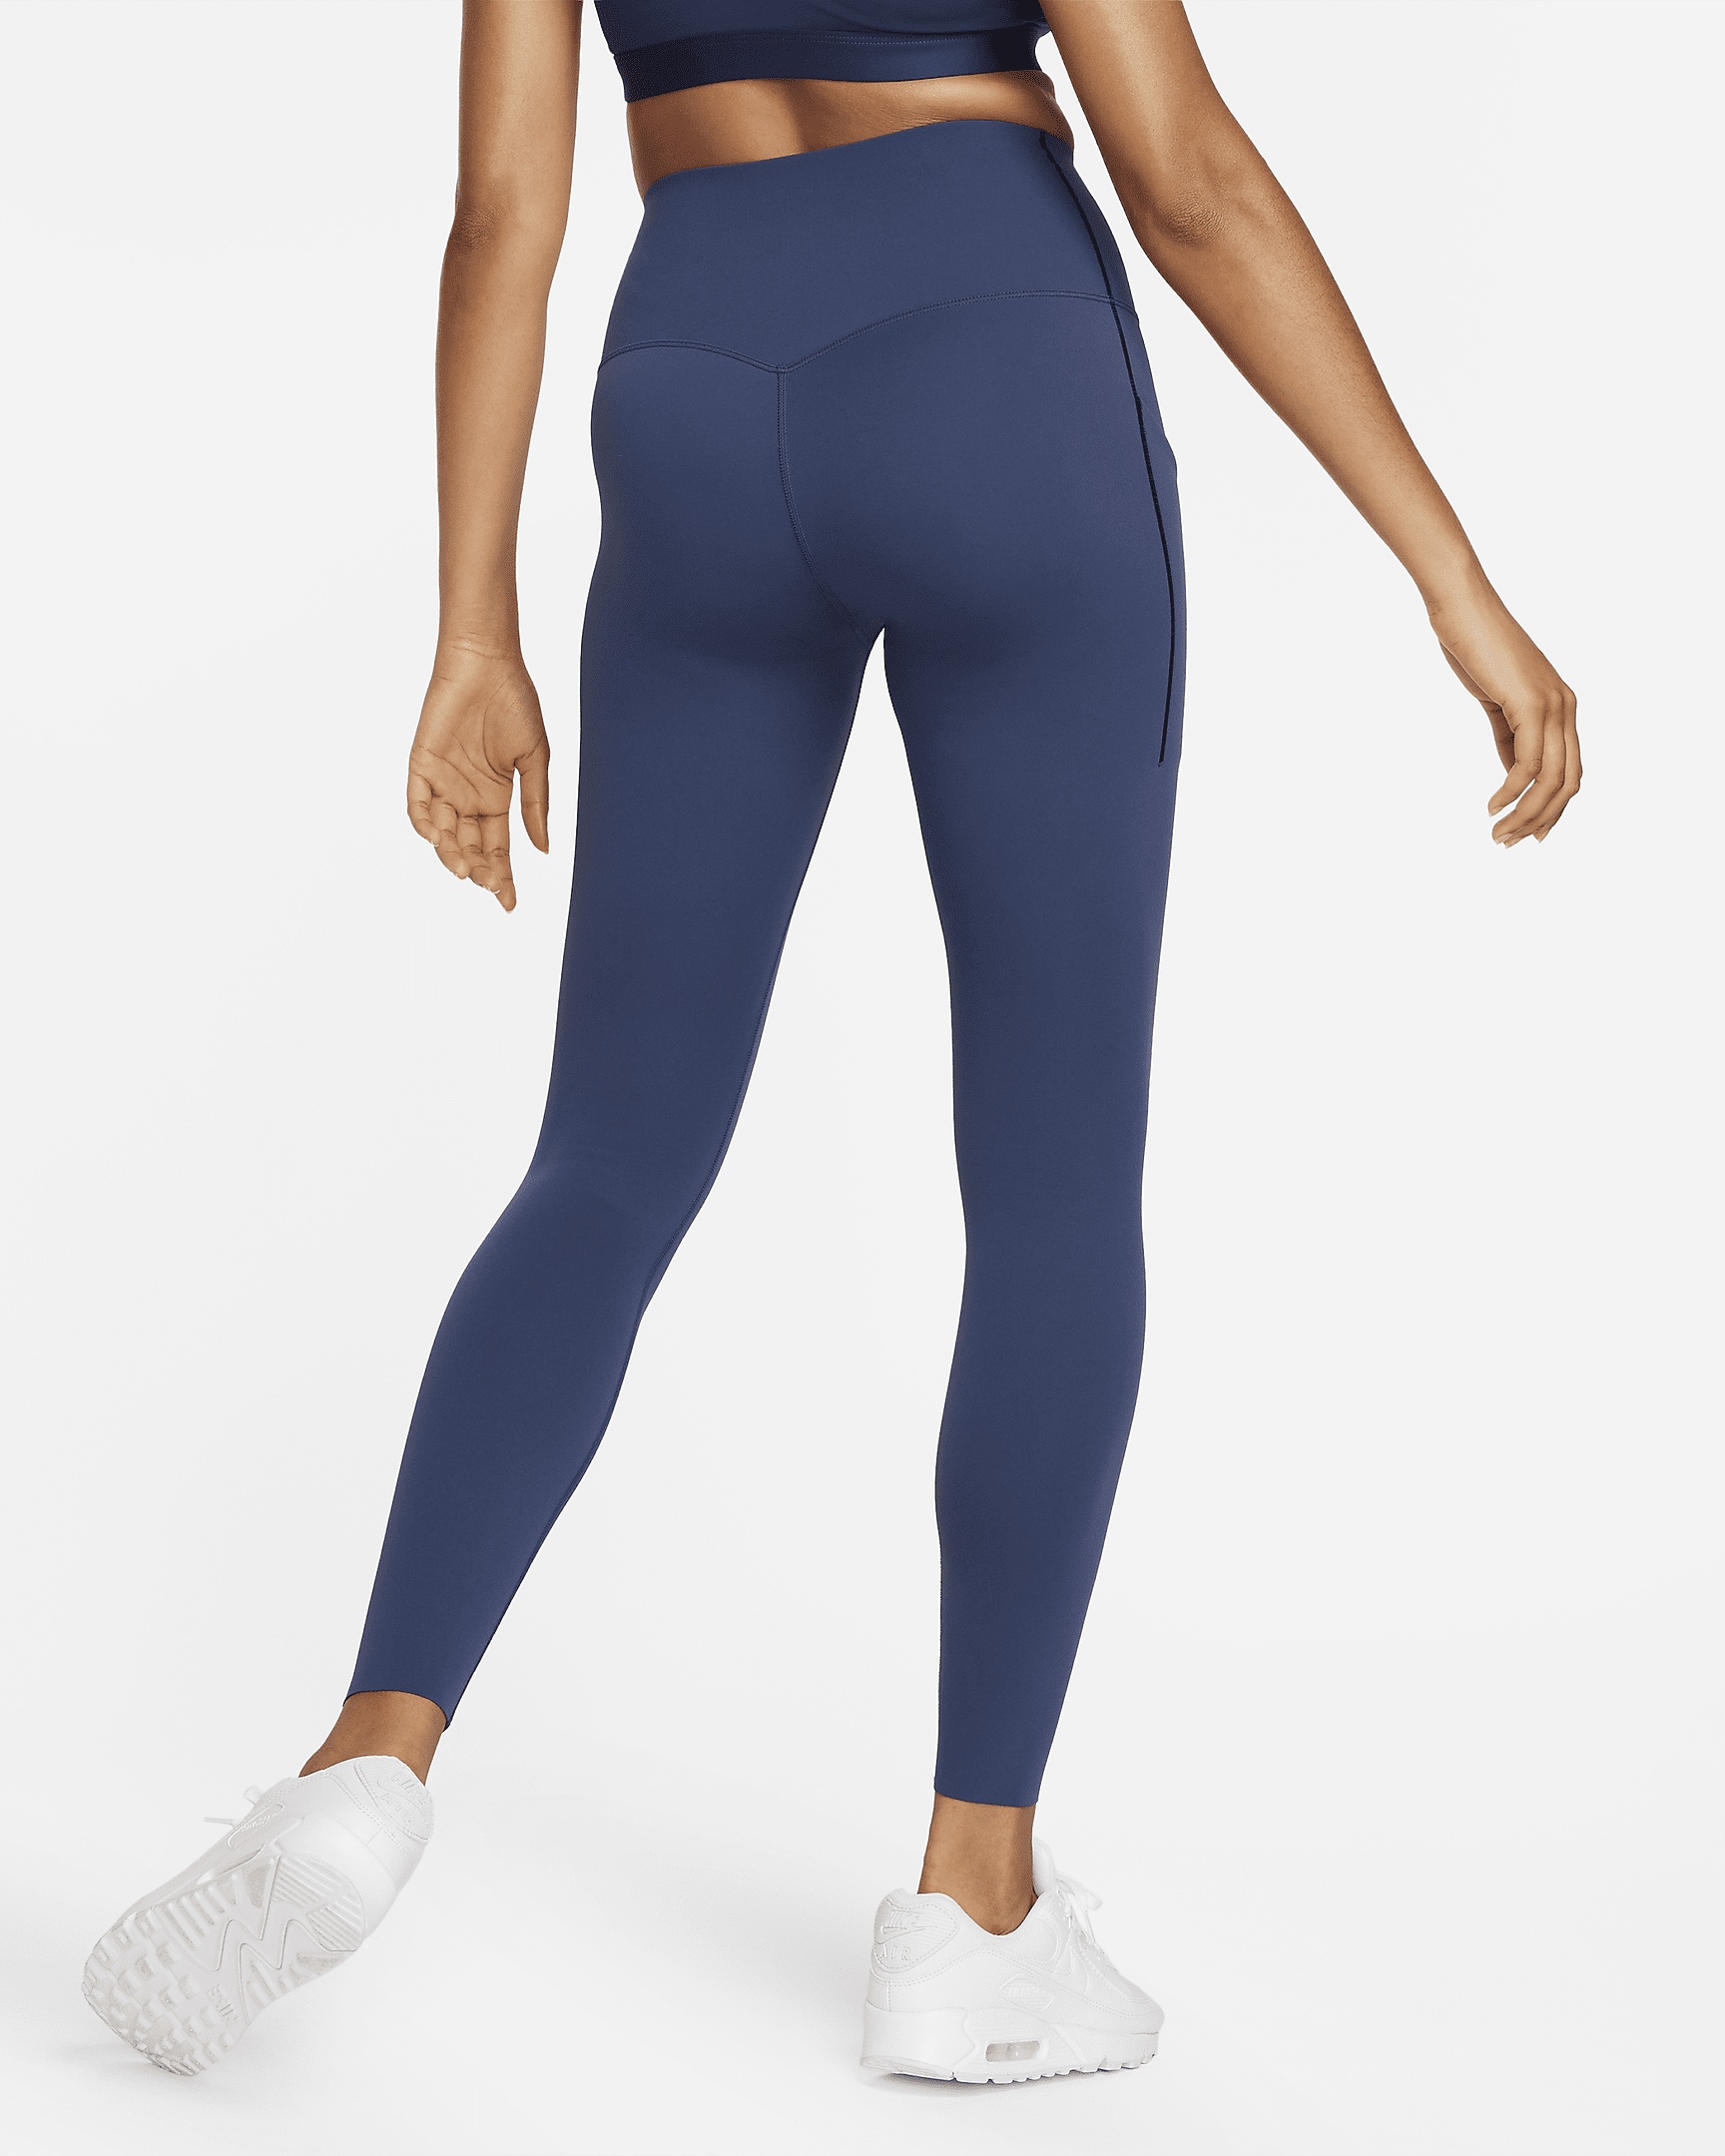 Nike Women's Universa Medium-Support High-Waisted Full-Length Leggings with Pockets - 2